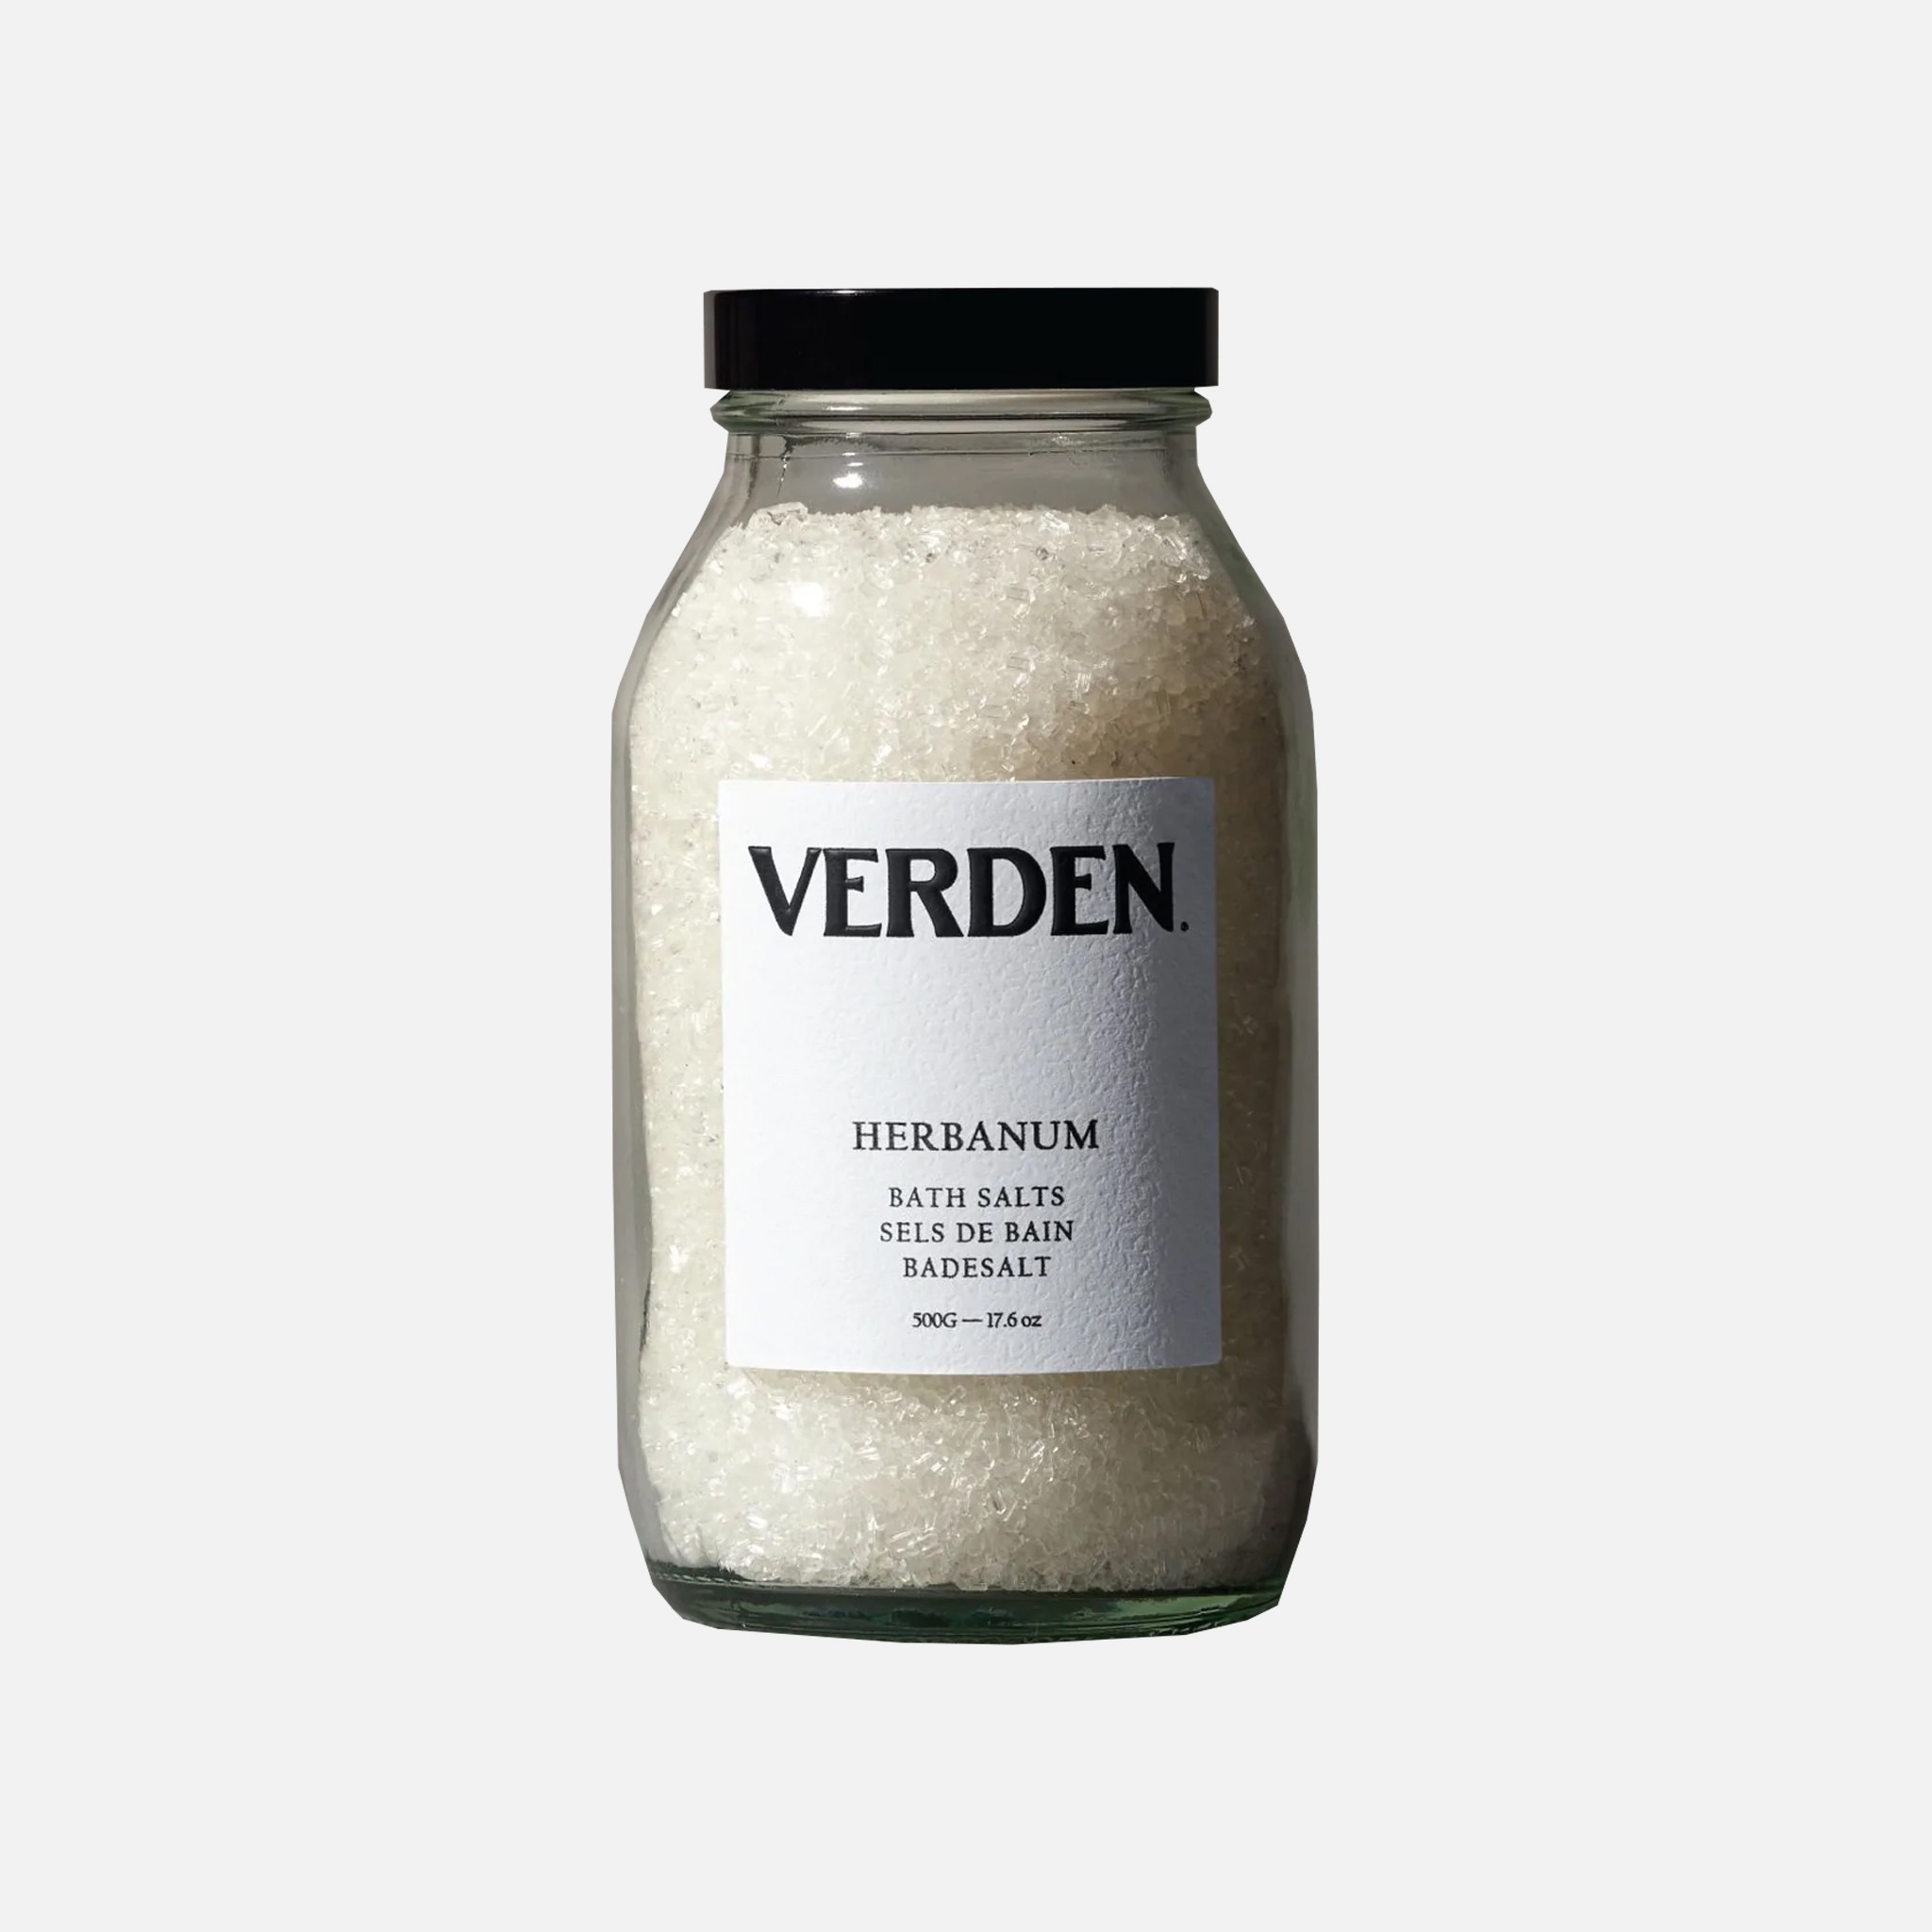 The image of an Verden Herbarium Bath Salts product